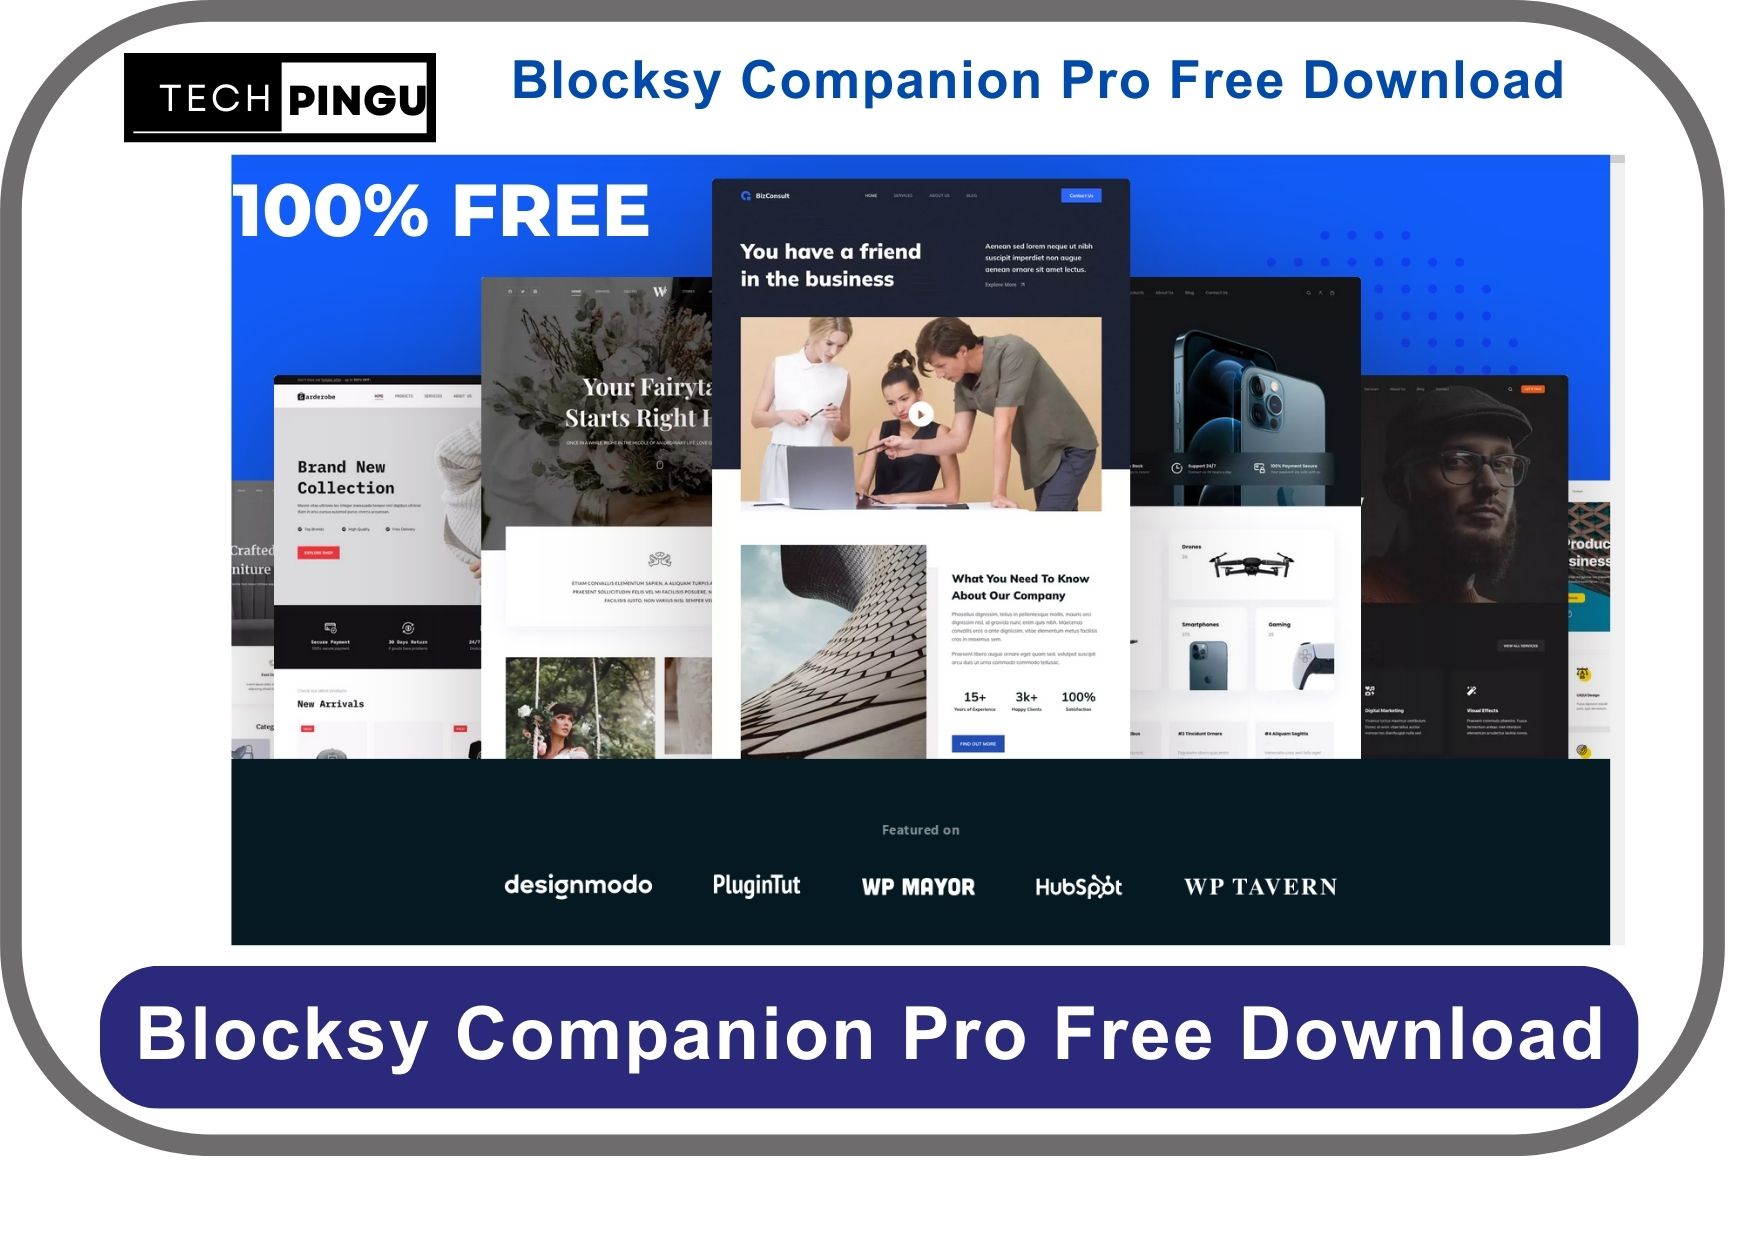 Blocksy Companion Pro Free Download